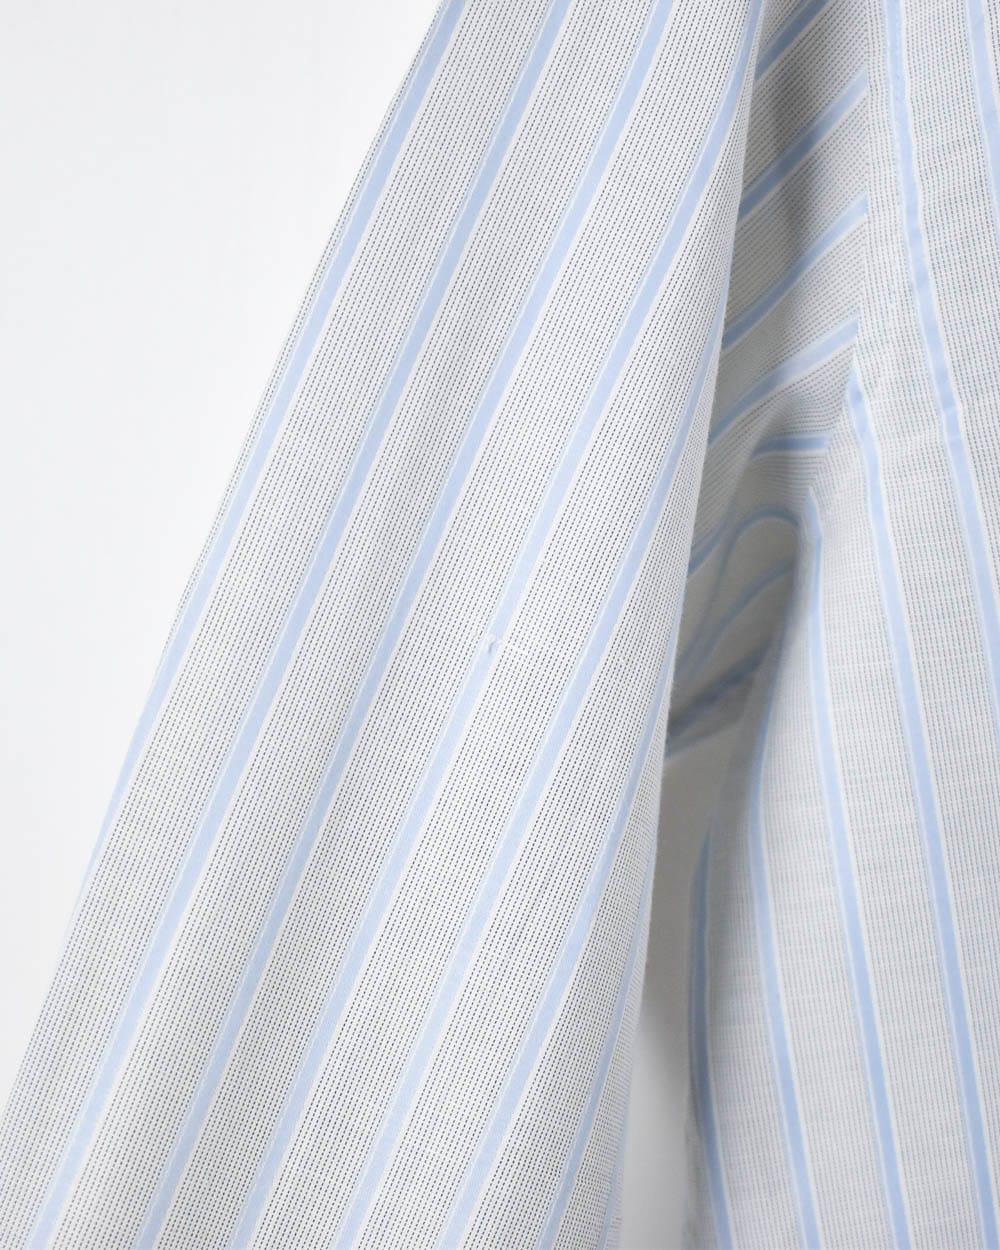 Stone Yves Saint Laurent Chemise Striped Shirt - Small